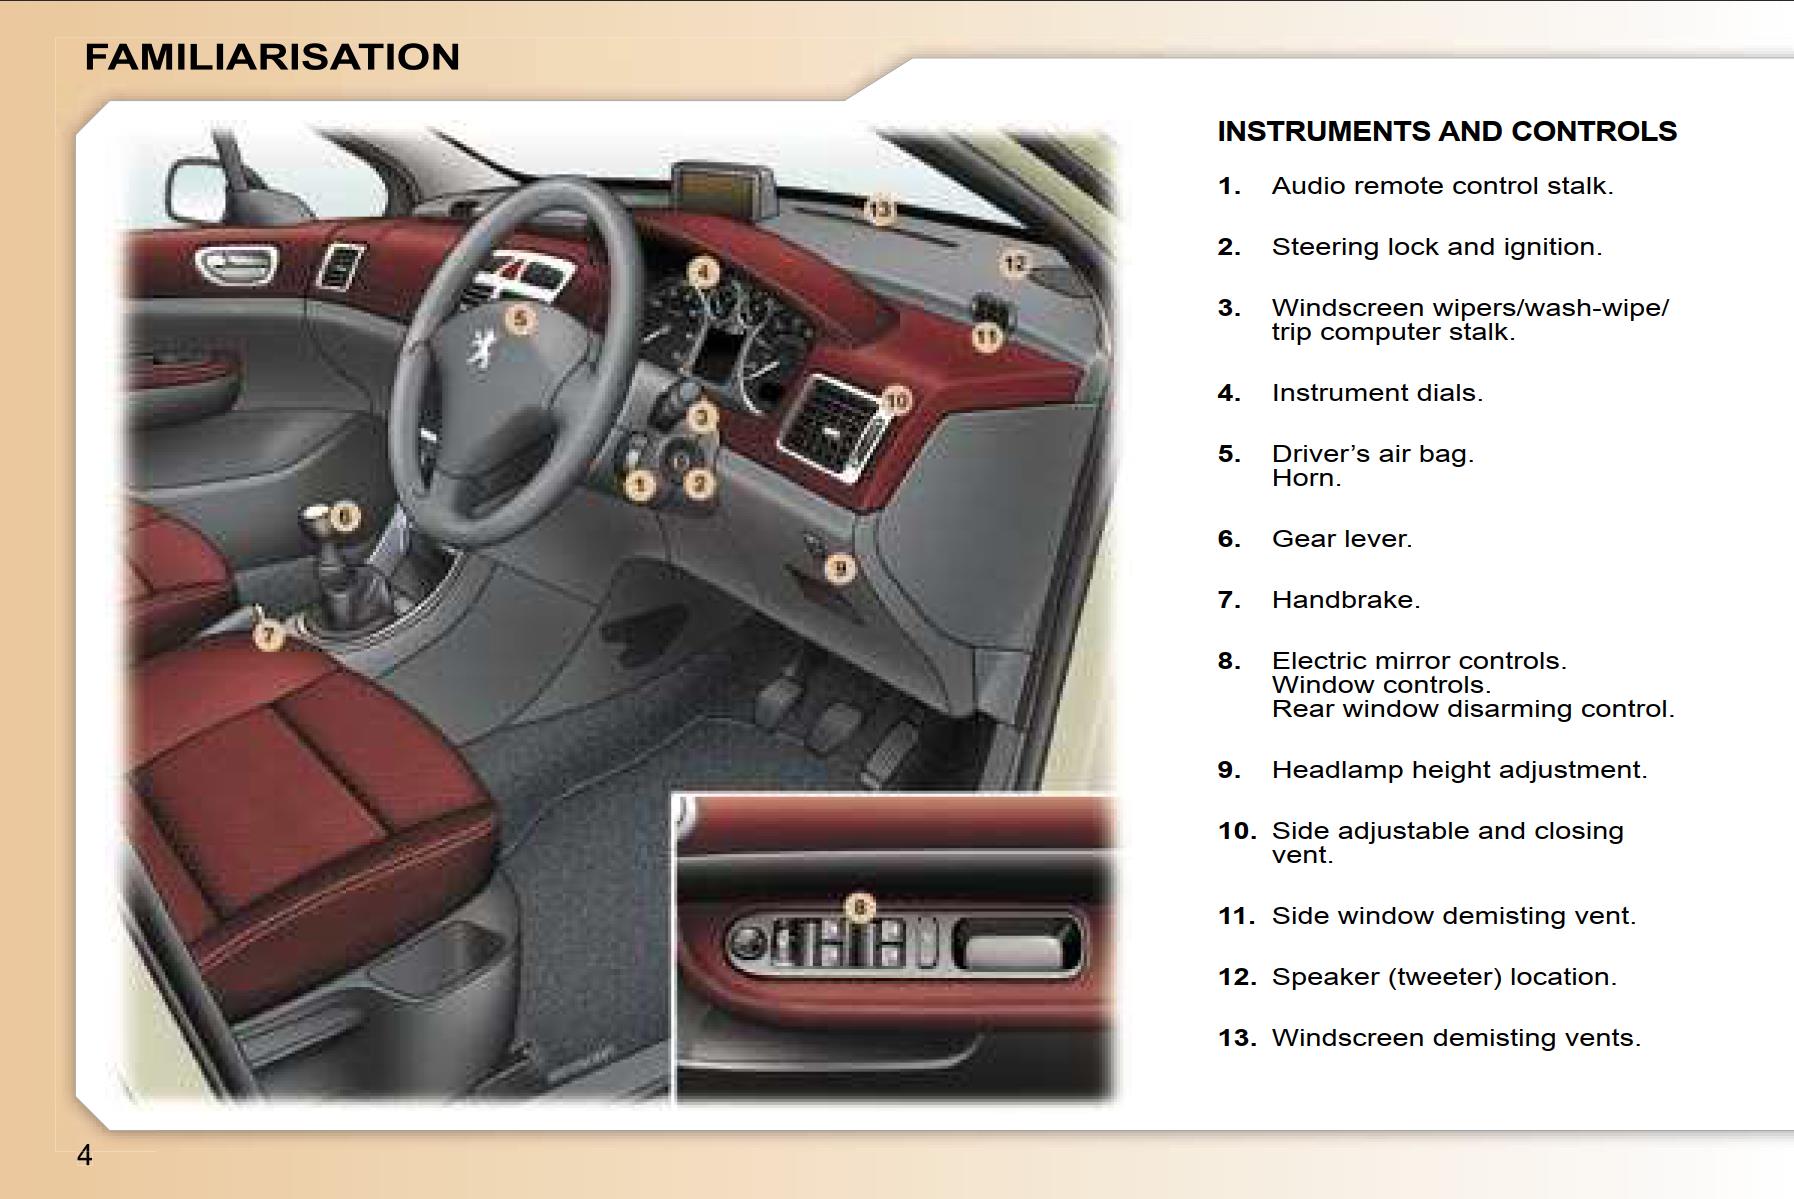 Peugeot 307 SW 2007 Owner's Manual PDF Download